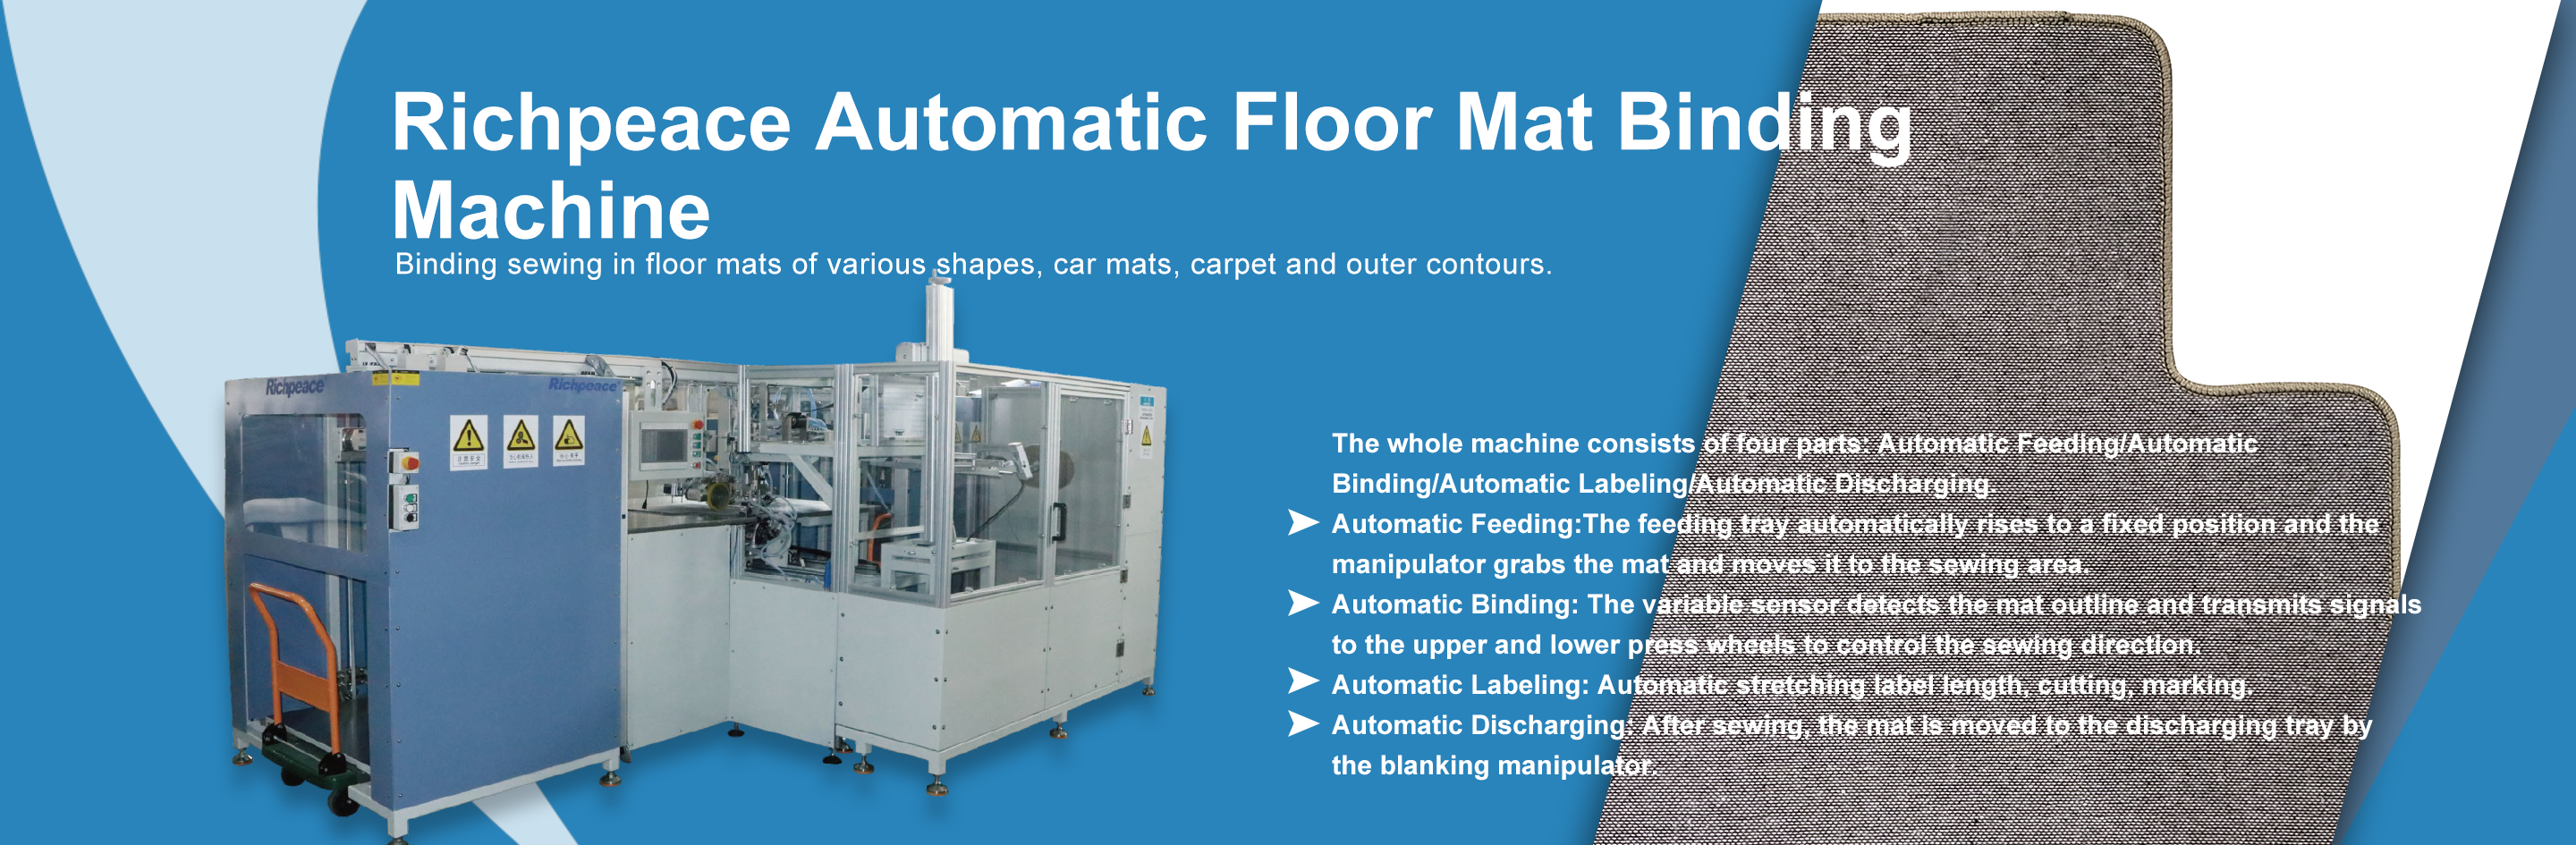 Richpeace Automatic Floor Mat Binding Machine